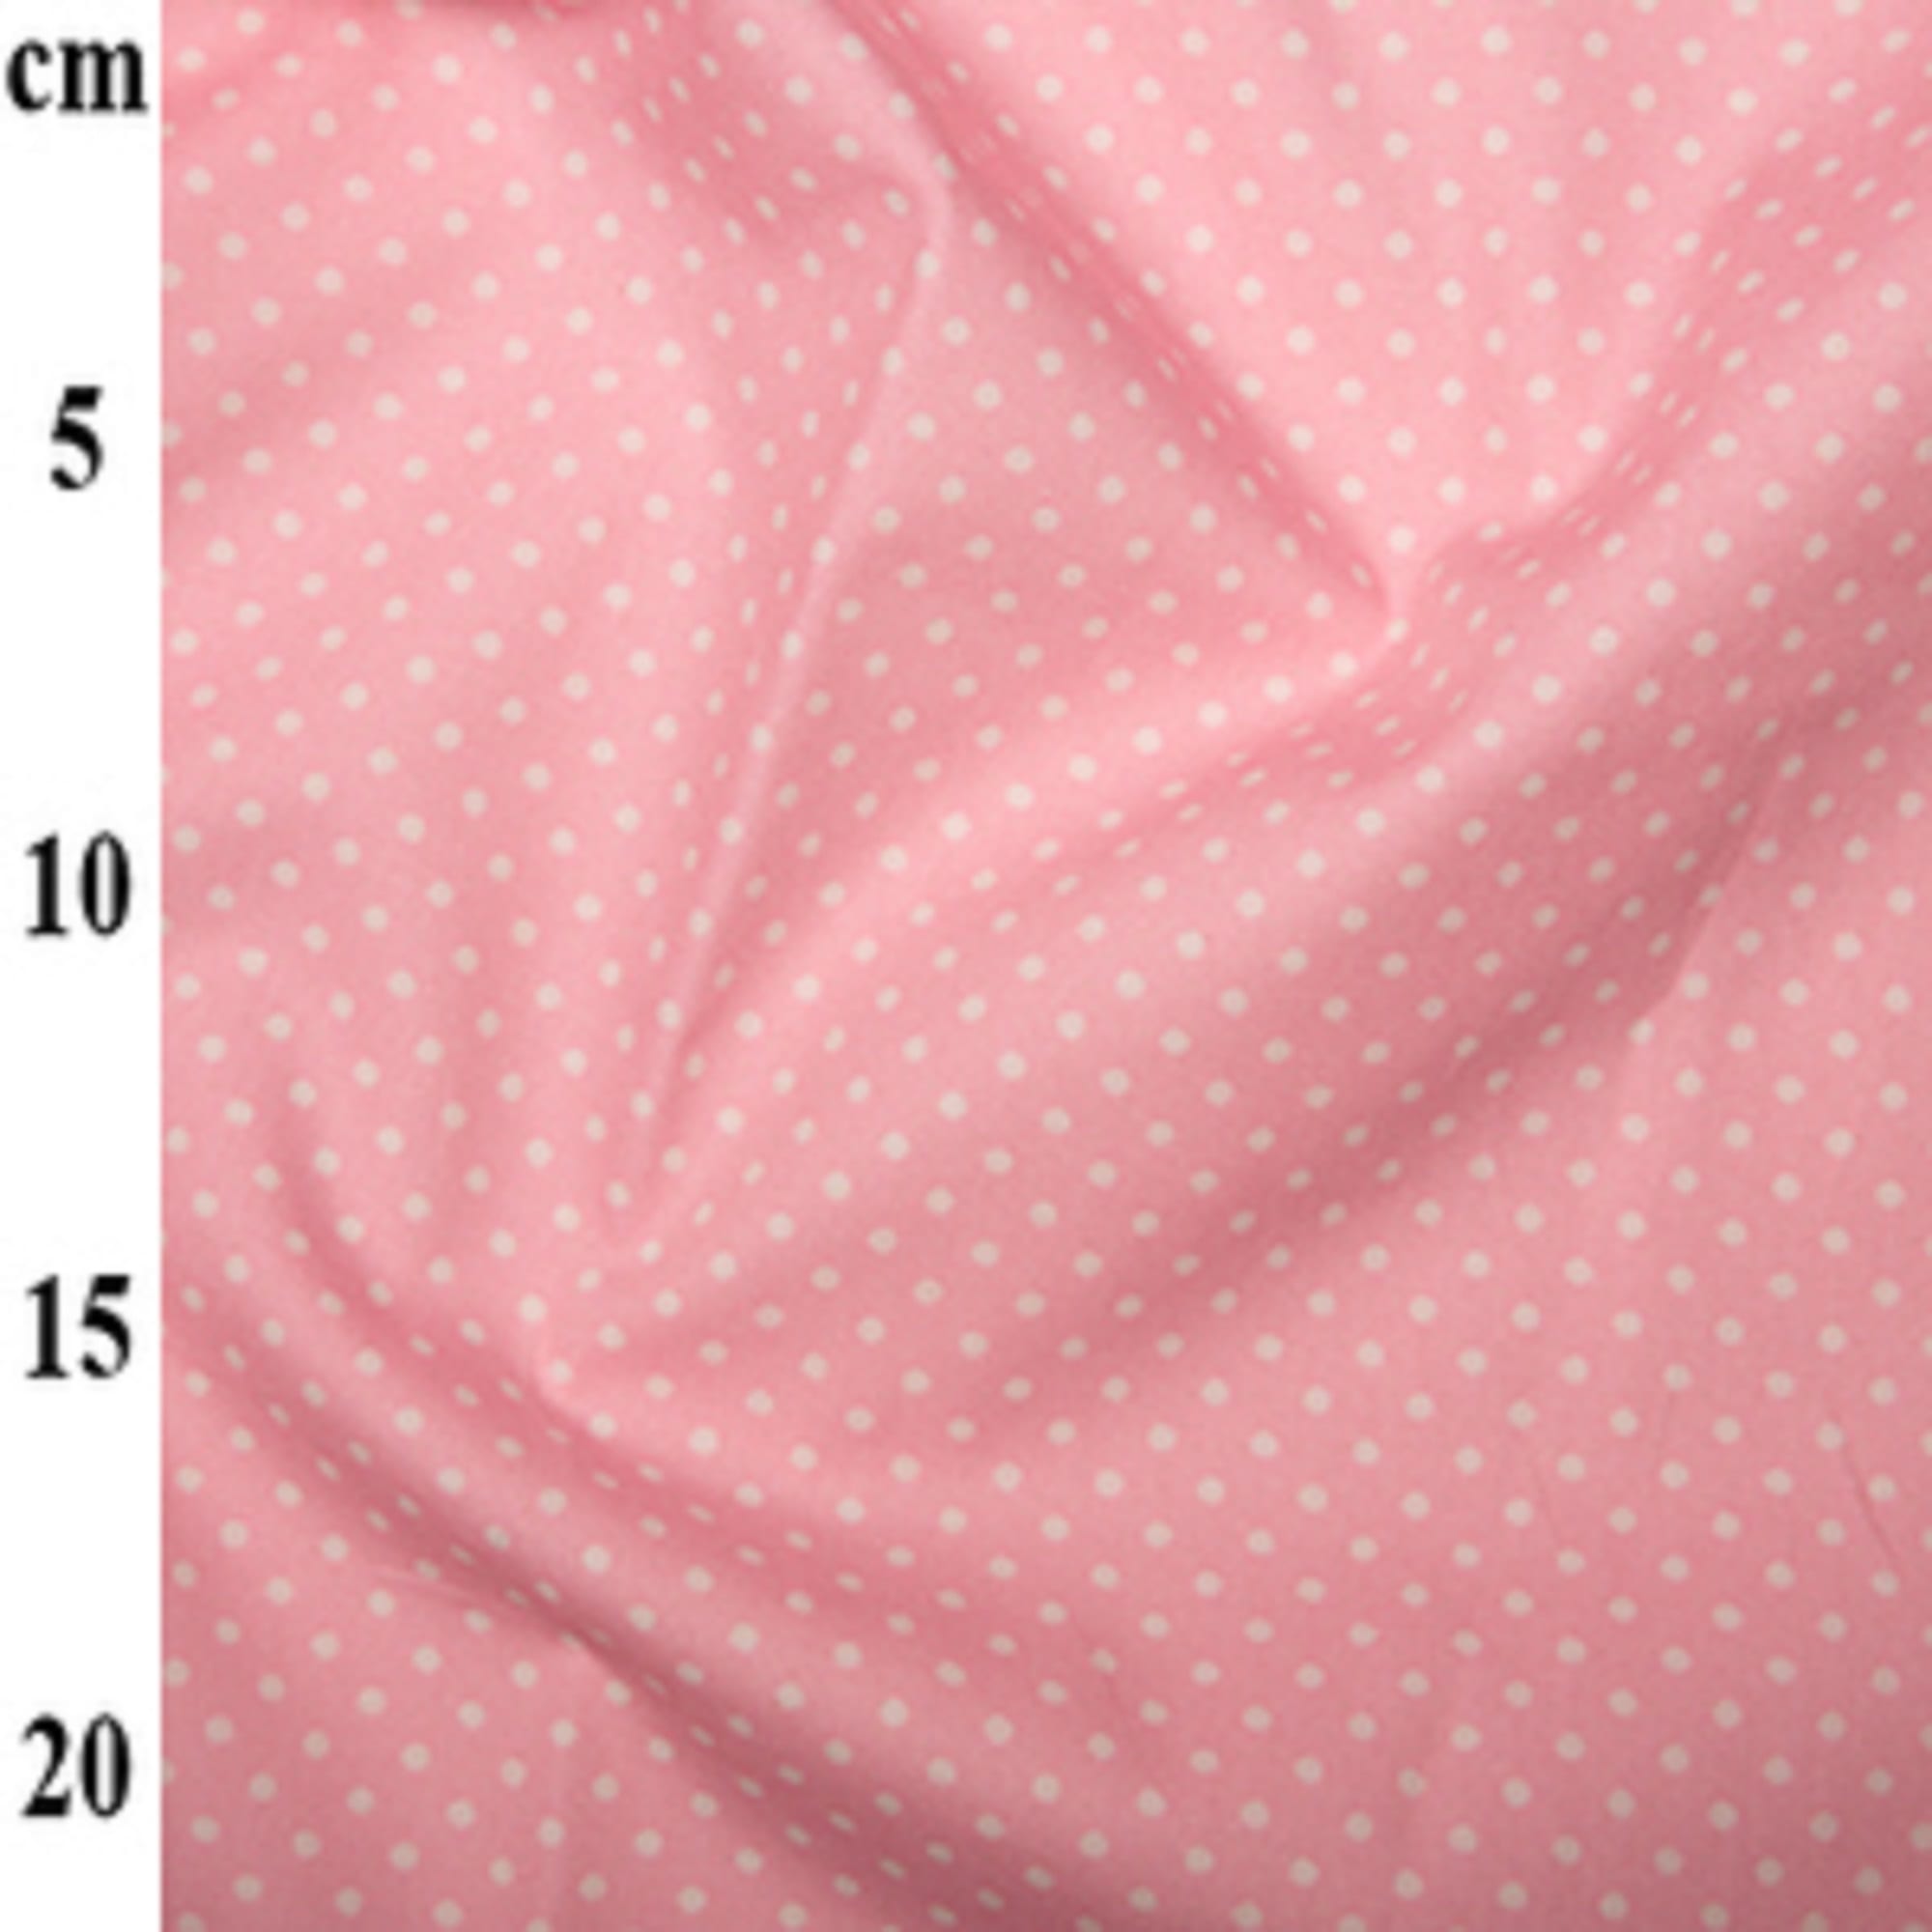 White Cotton Poplin Fabric, 110cm (44) wide, 130 gsm - Free UK Postage,  Premium Cotton Fabric